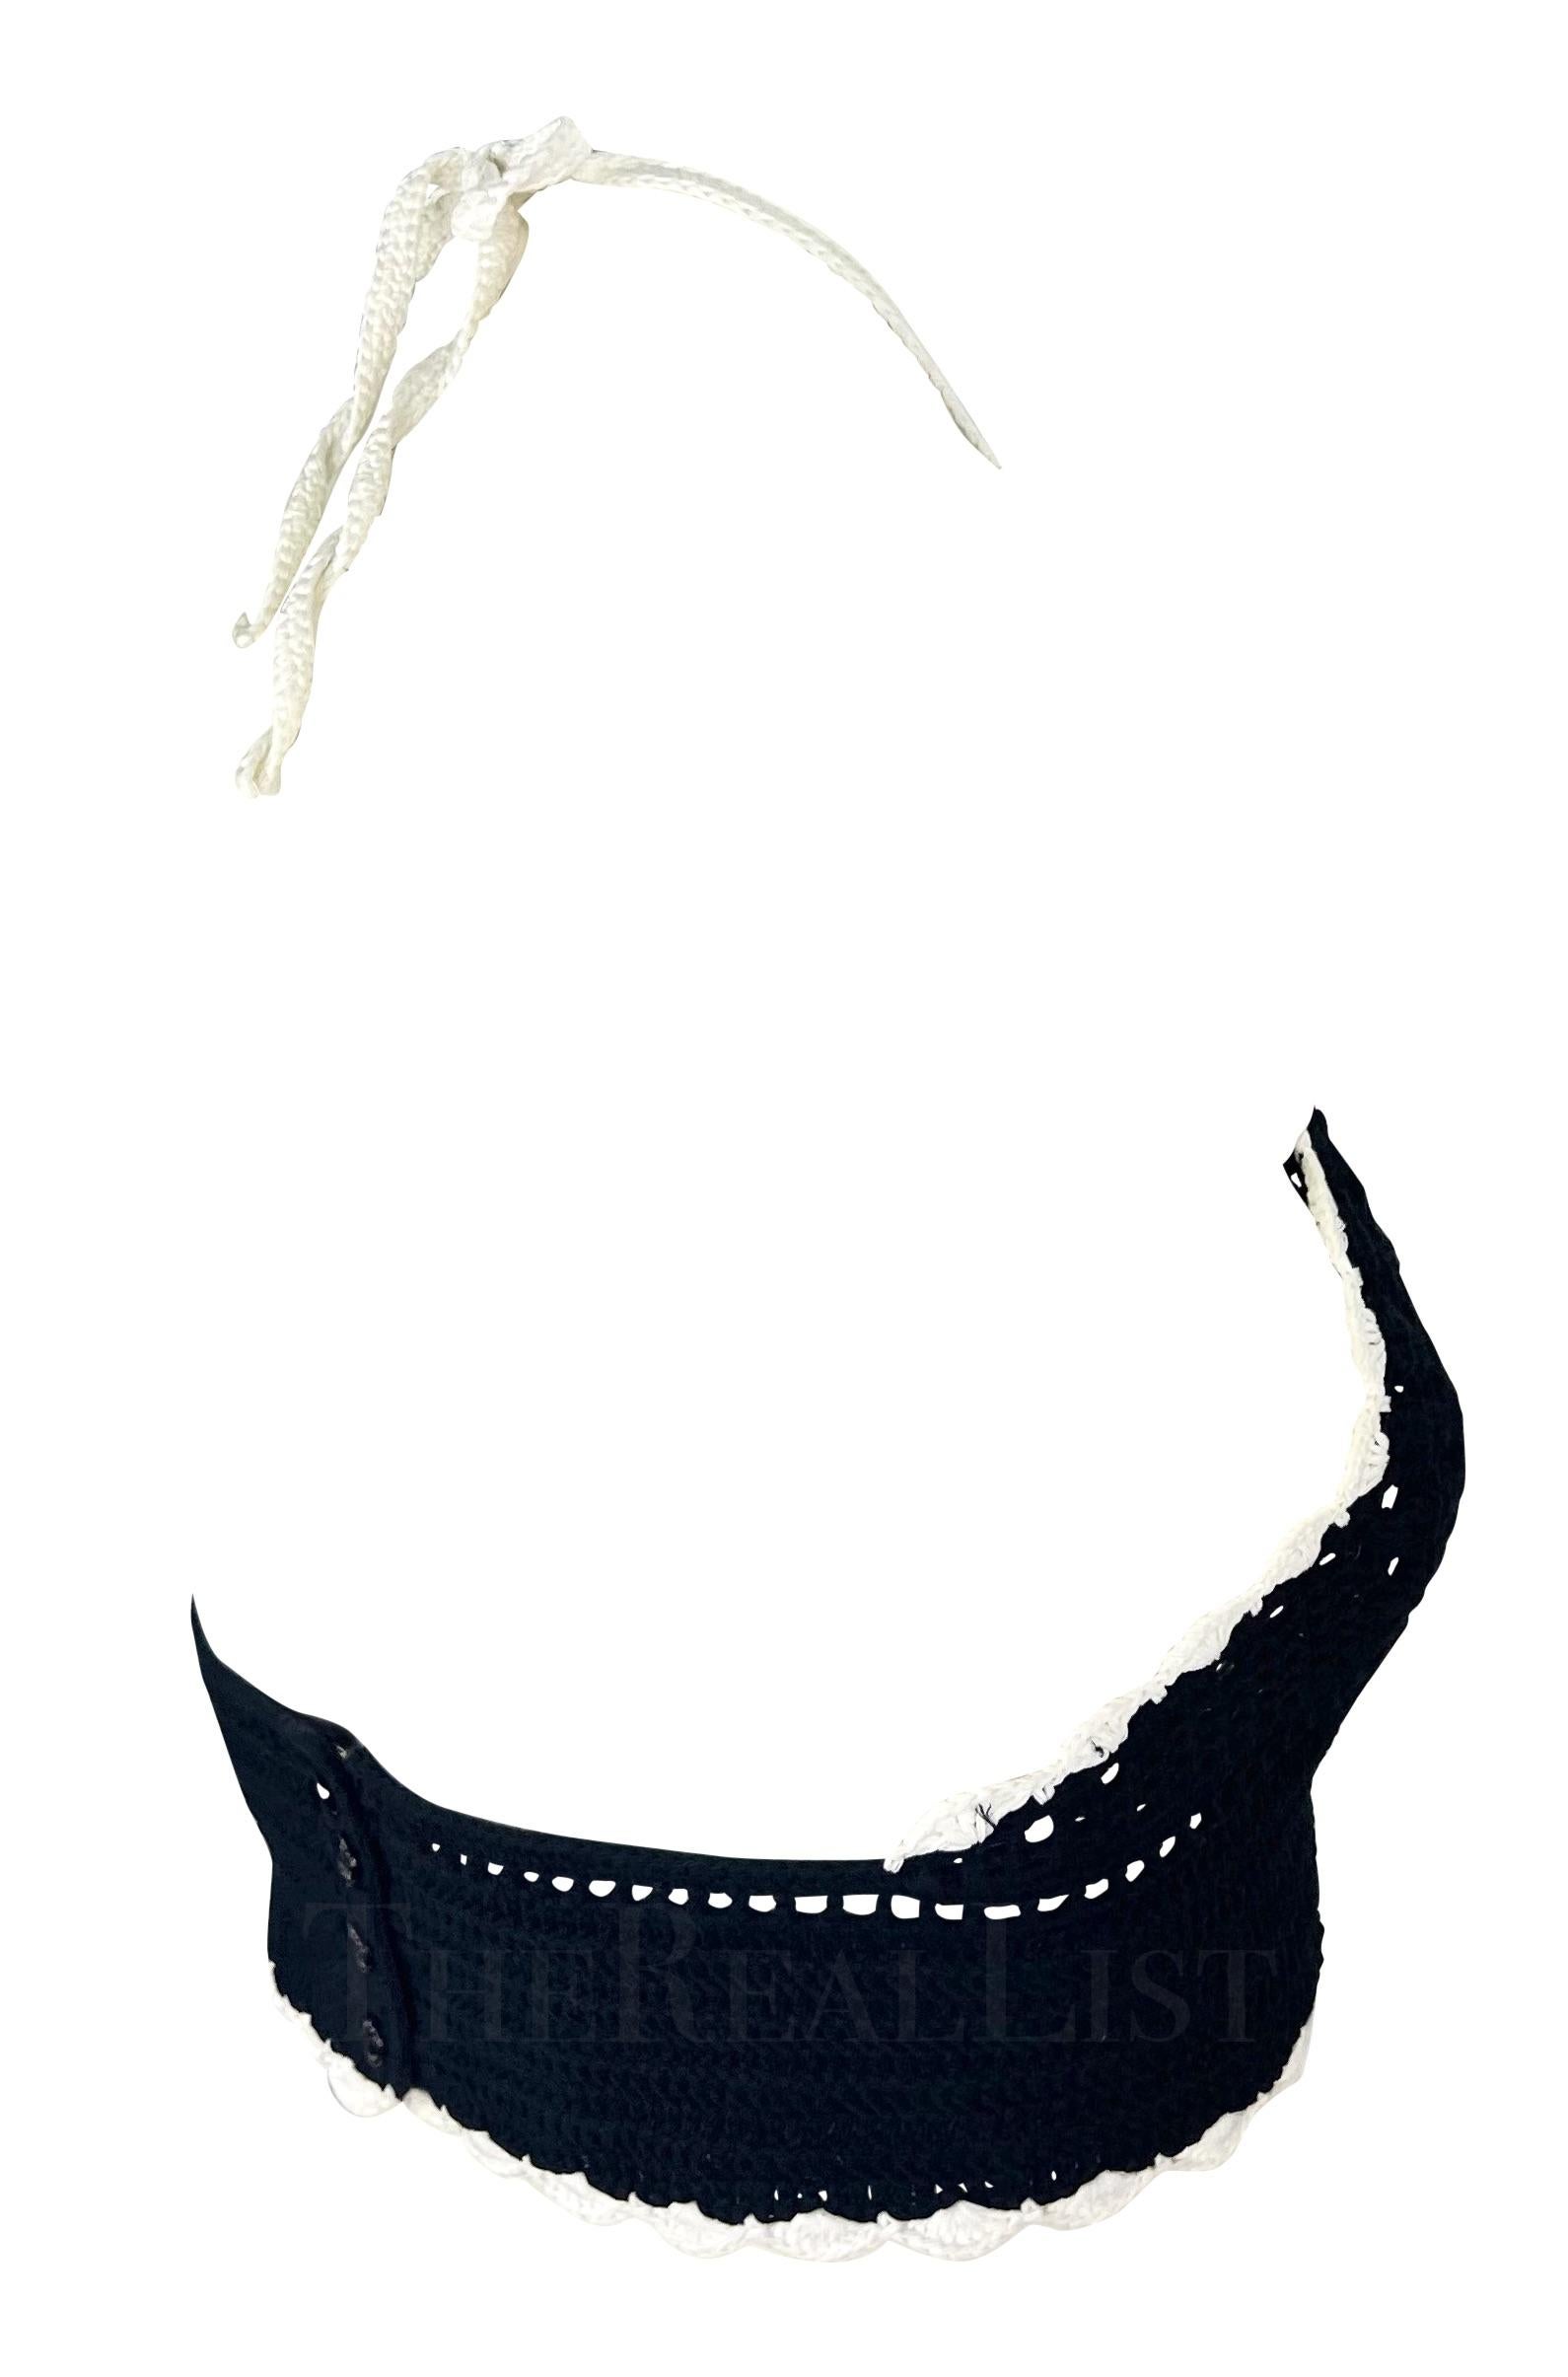 S/S 2004 Chanel by Karl Lagerfeld Black Crochet Halterneck Bralette For Sale 1